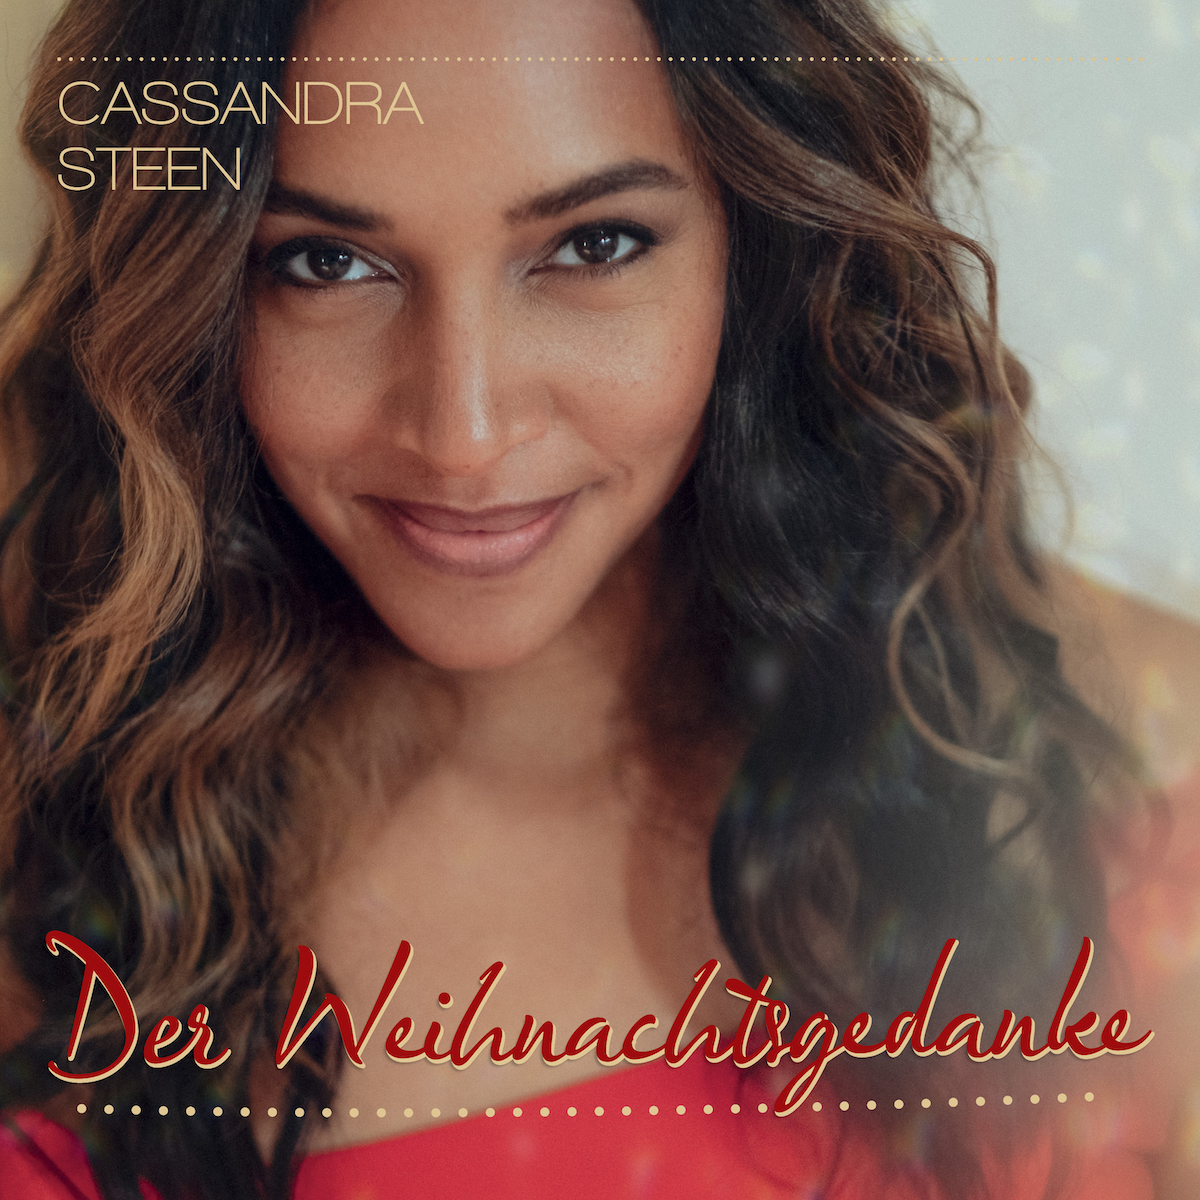 Cassandra Steen / Albumcover (c) SugarLoup Records